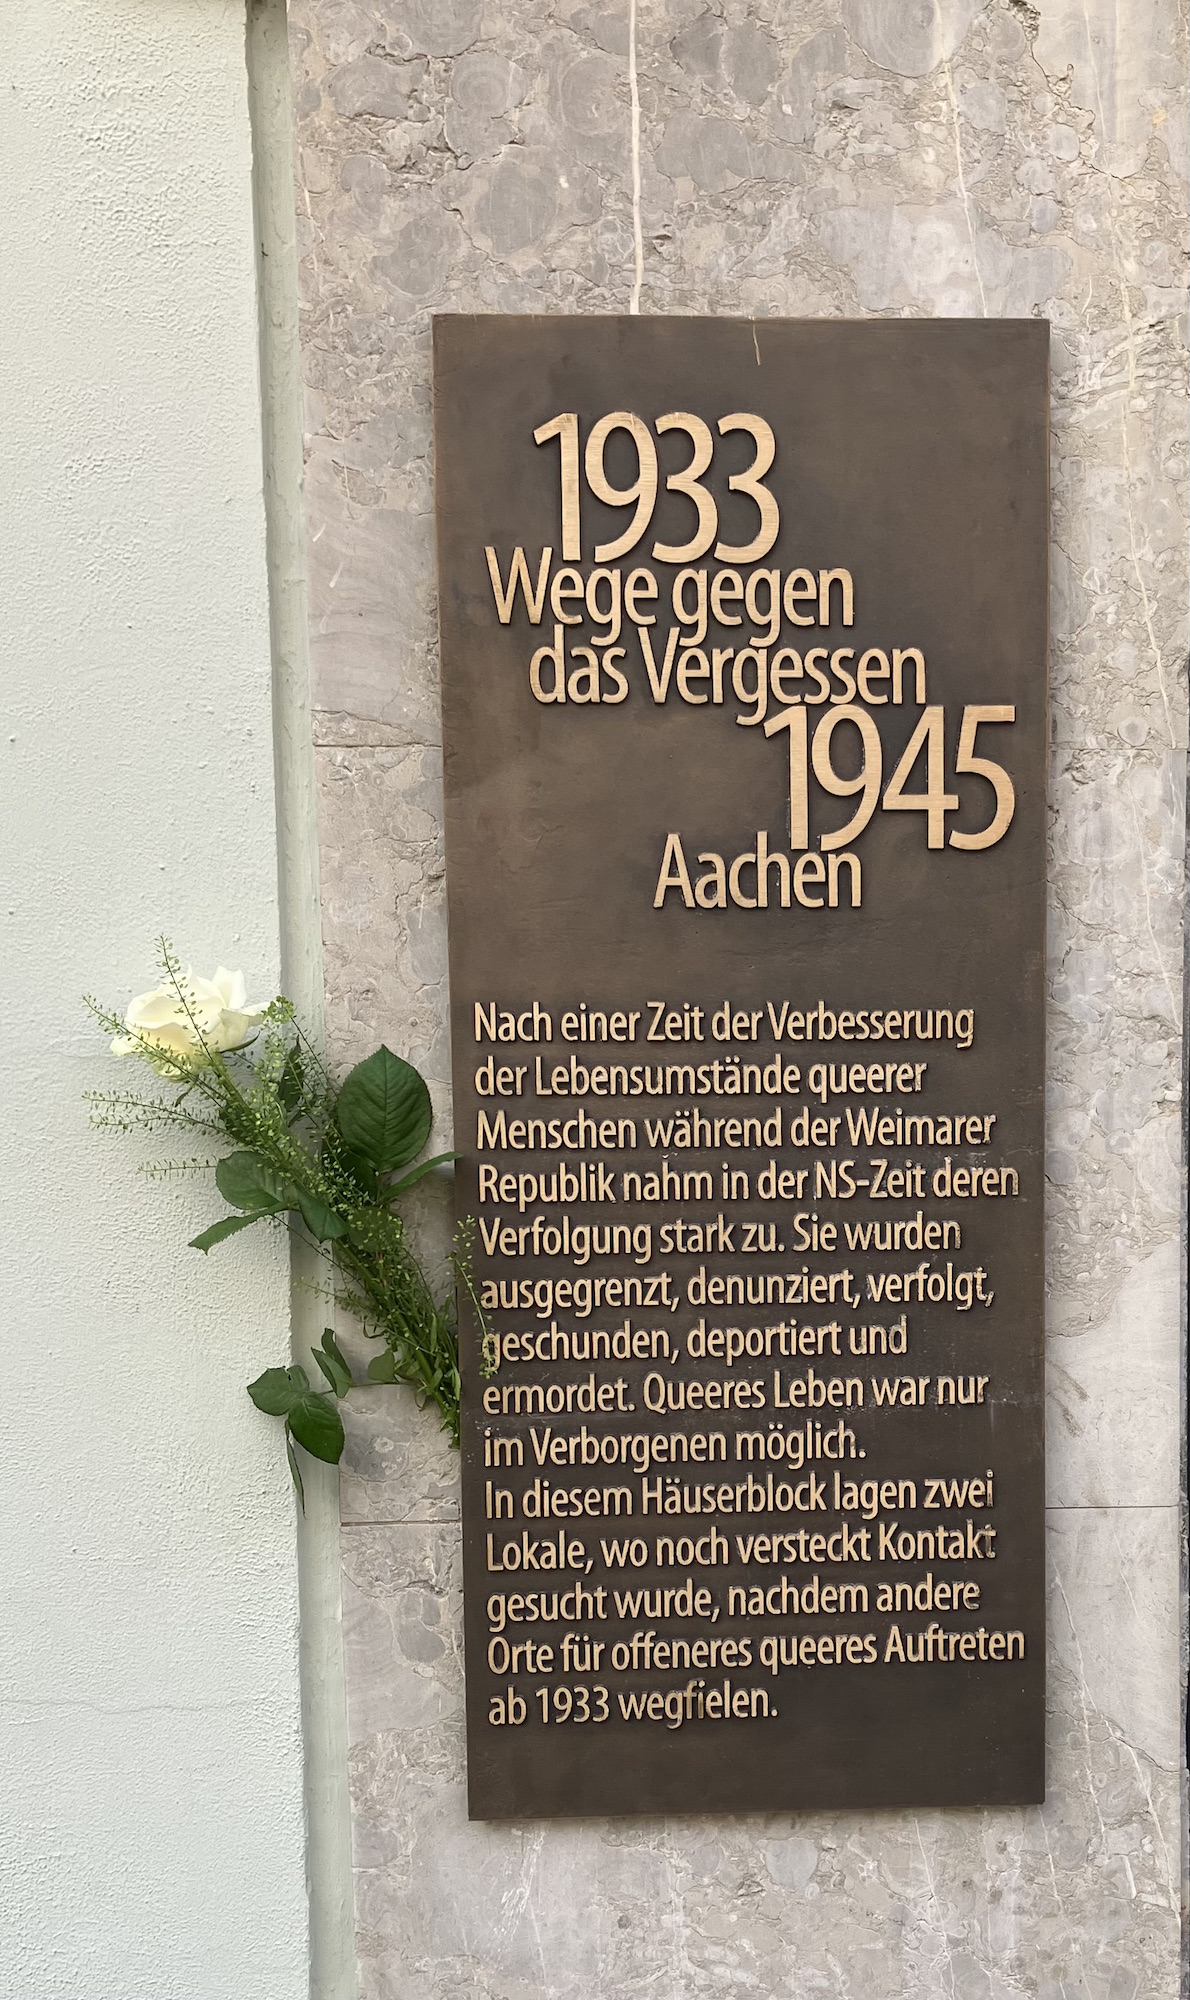 43 solcher Tafeln erinnern in Aachen an die Opfer. (c) Andrea Thomas